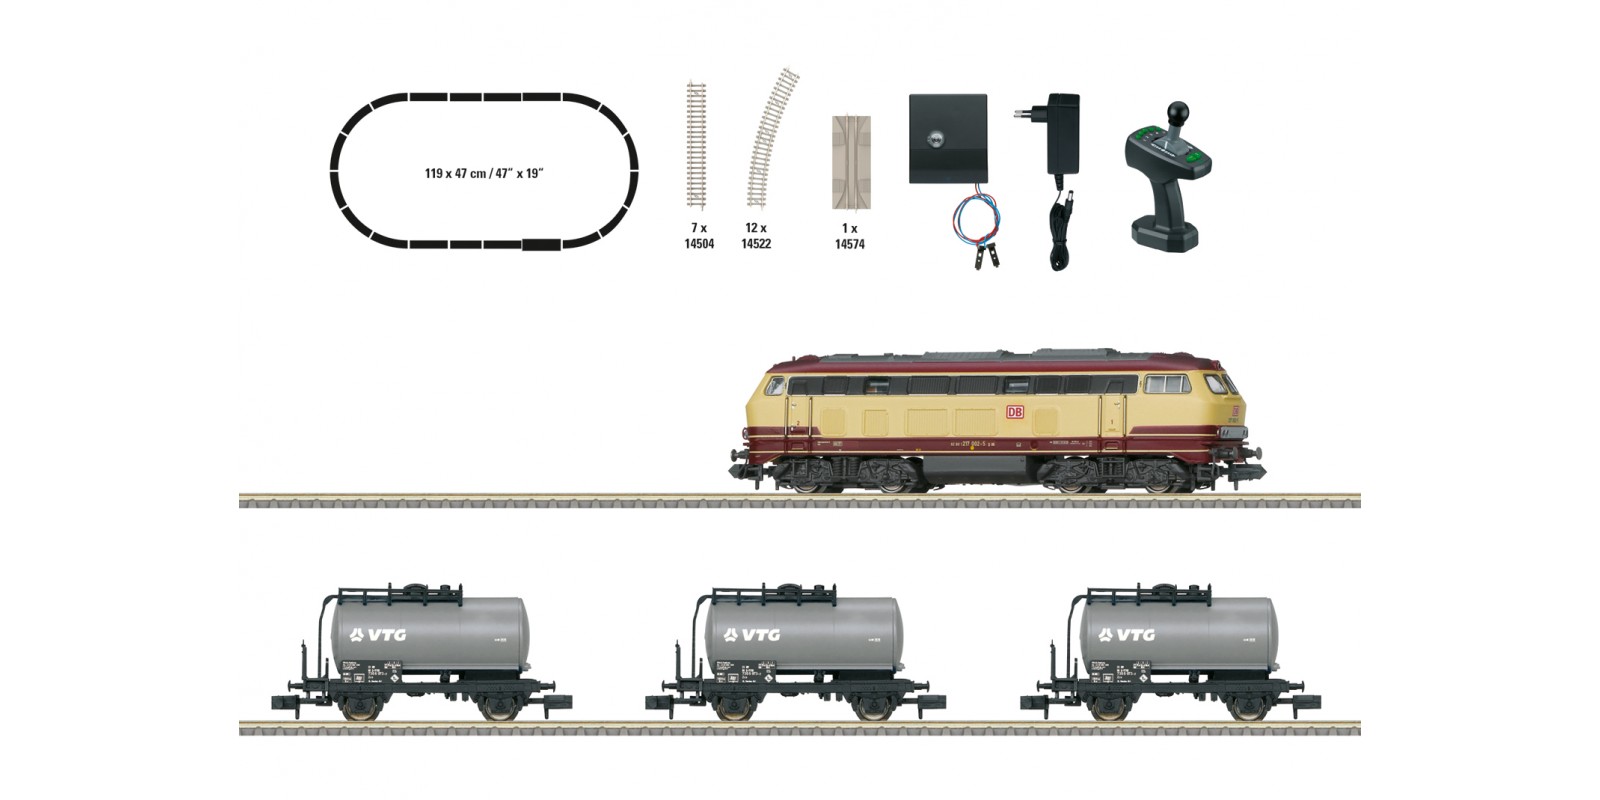 T11160 Freight Train Digital Starter Set with a Class 217